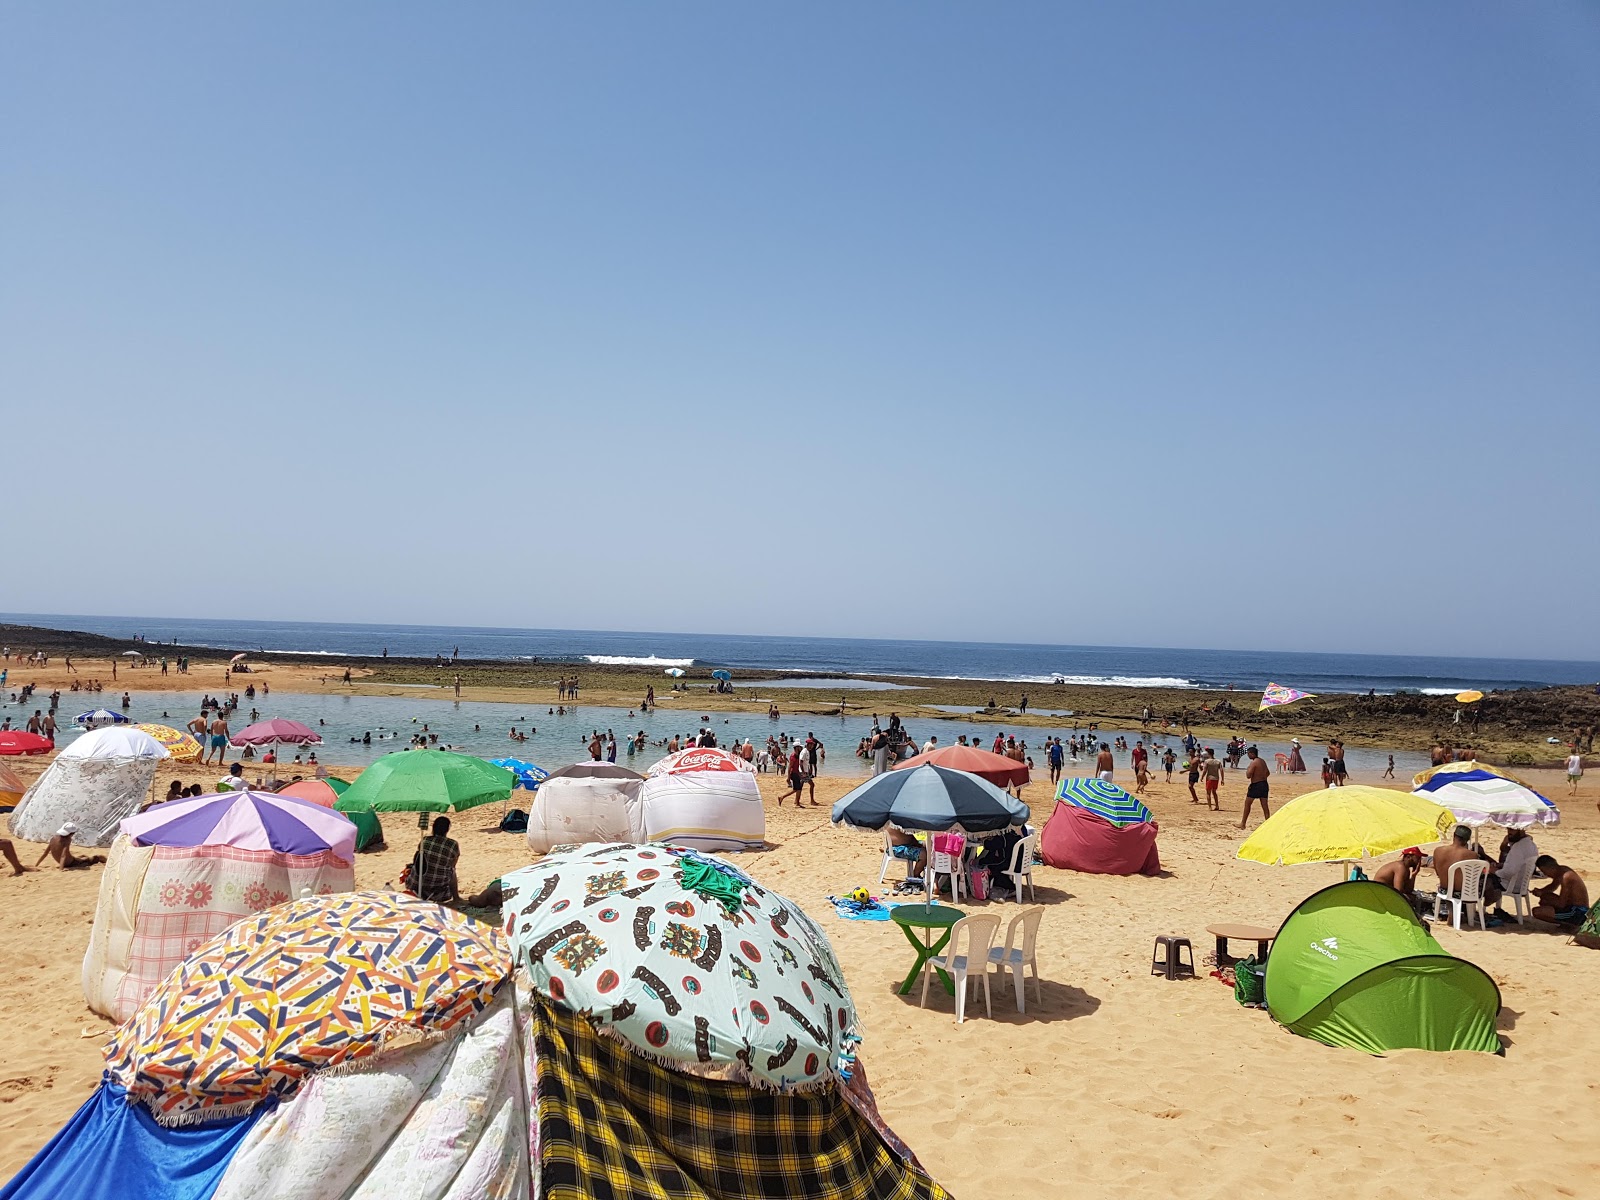 Sidi Belkheir Beach shaty sydy balkhyr'in fotoğrafı vahşi alan